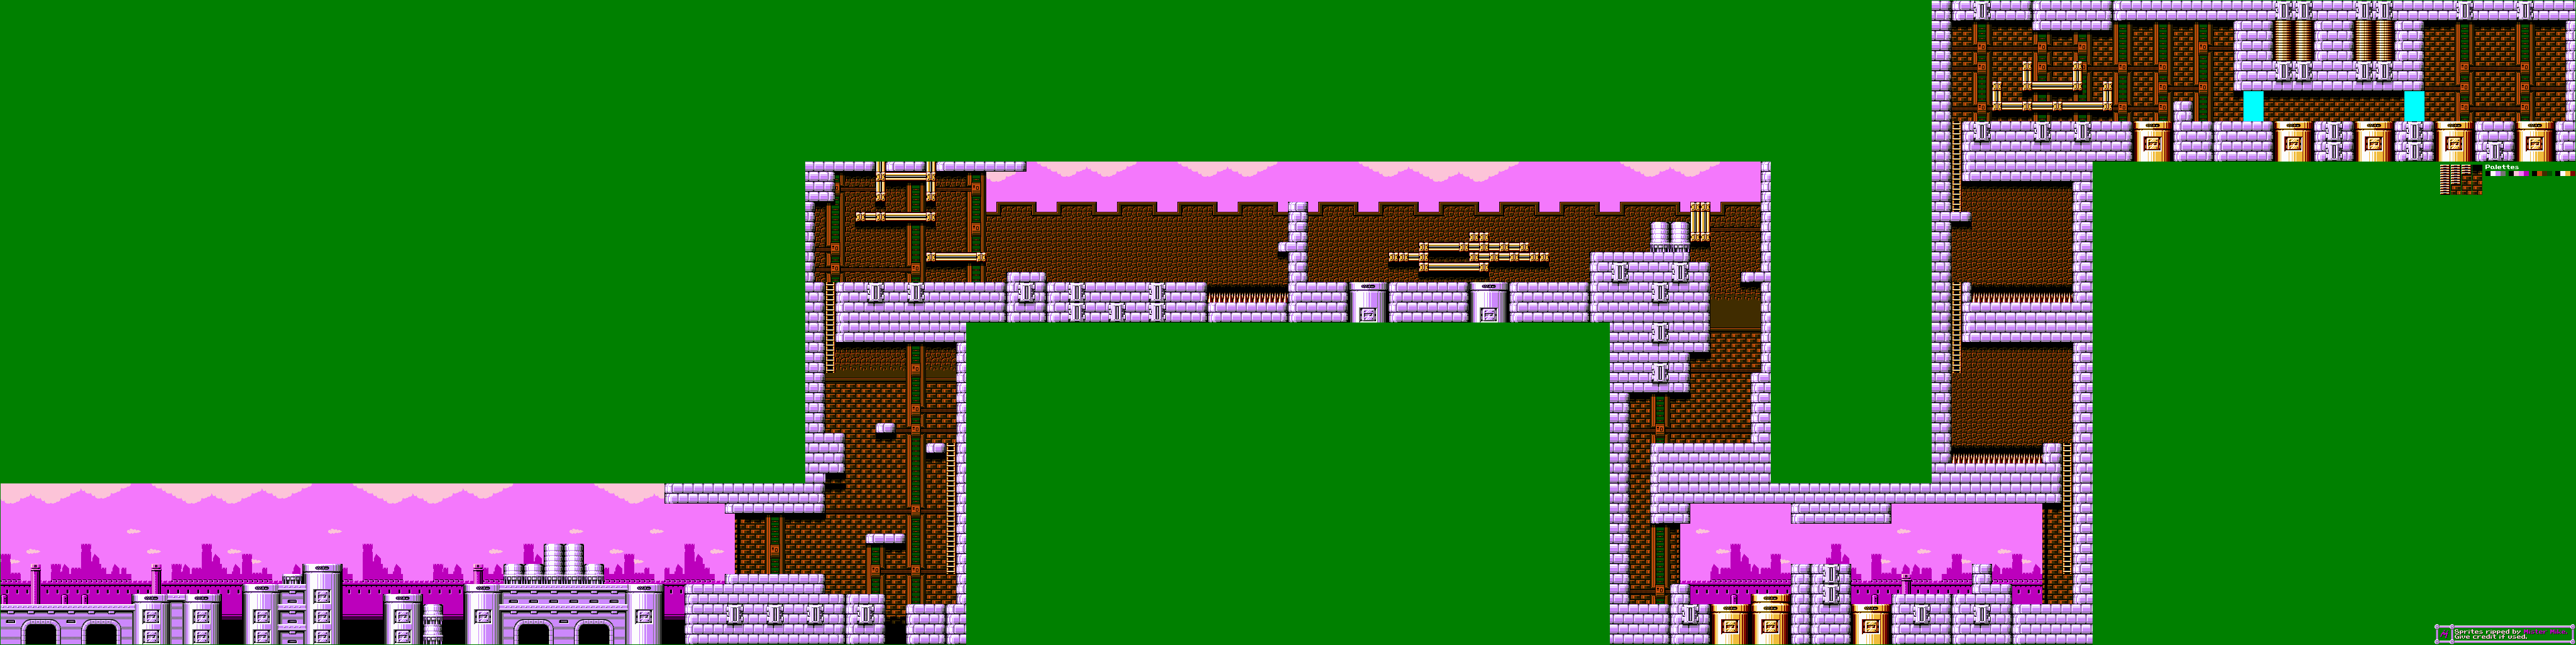 NES - Mega Man 5 - Proto Man's Castle Stage 1 - The Spriters Resource